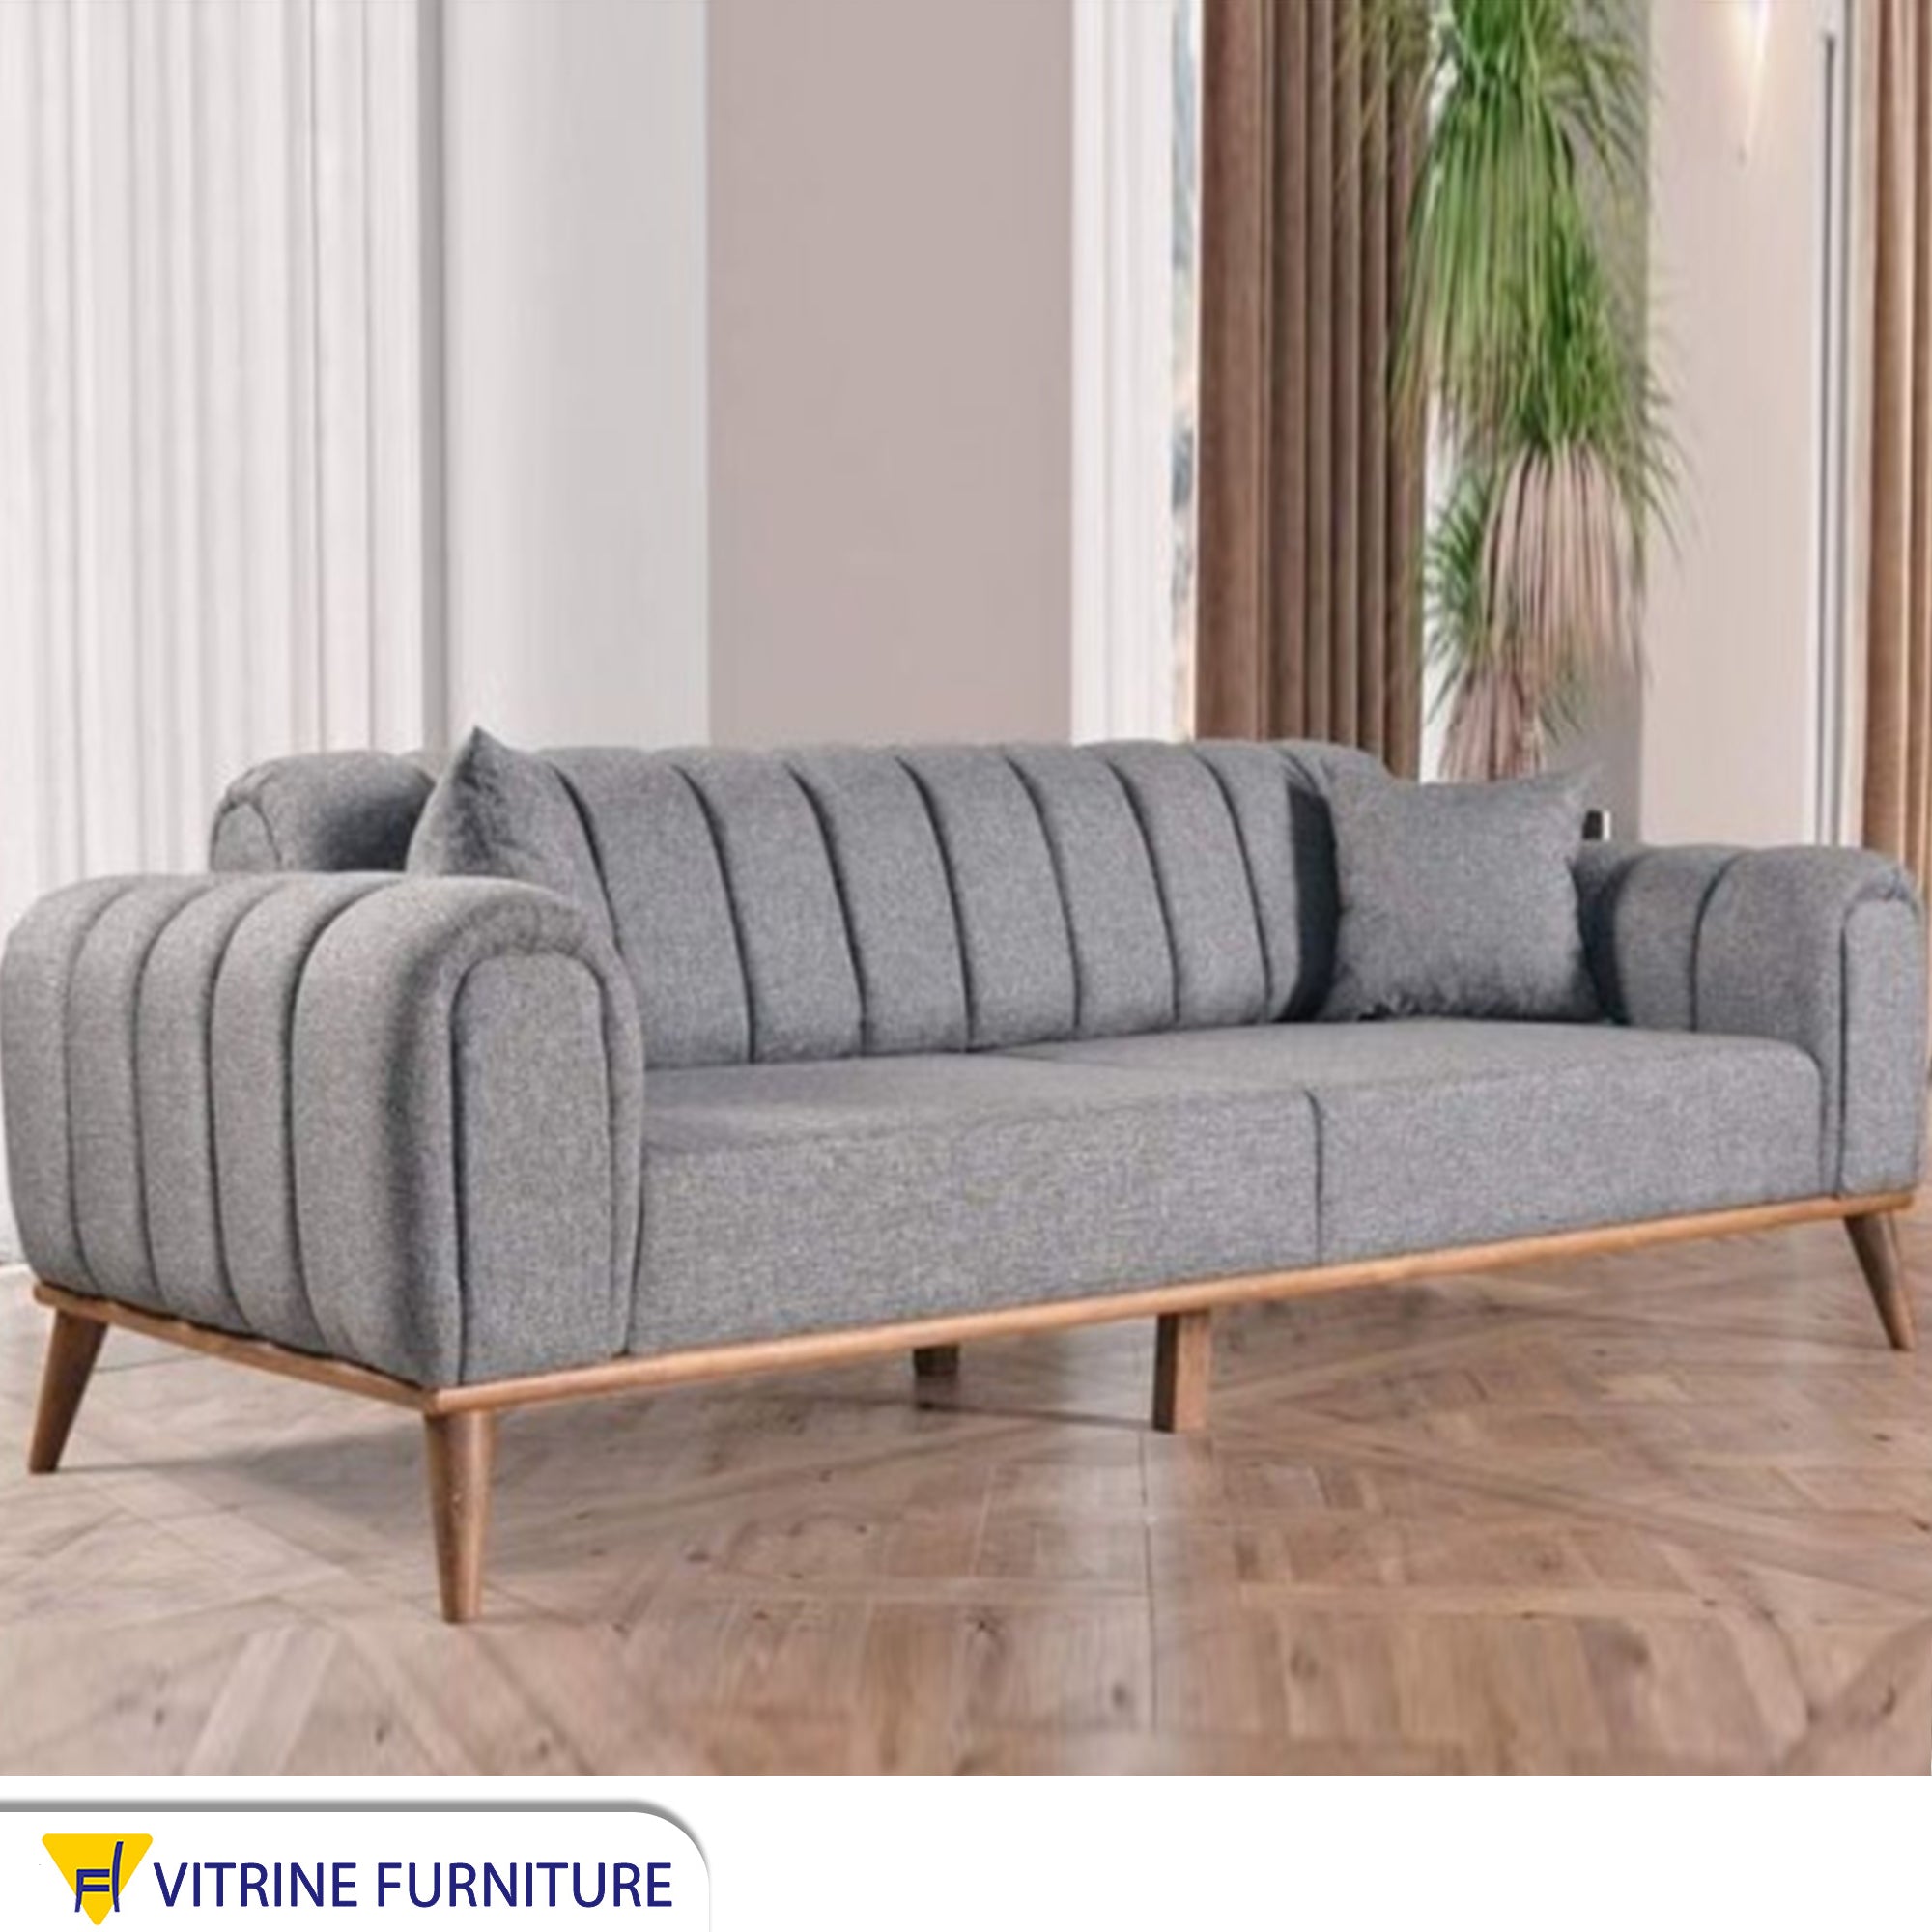 Triple sofa in light gray